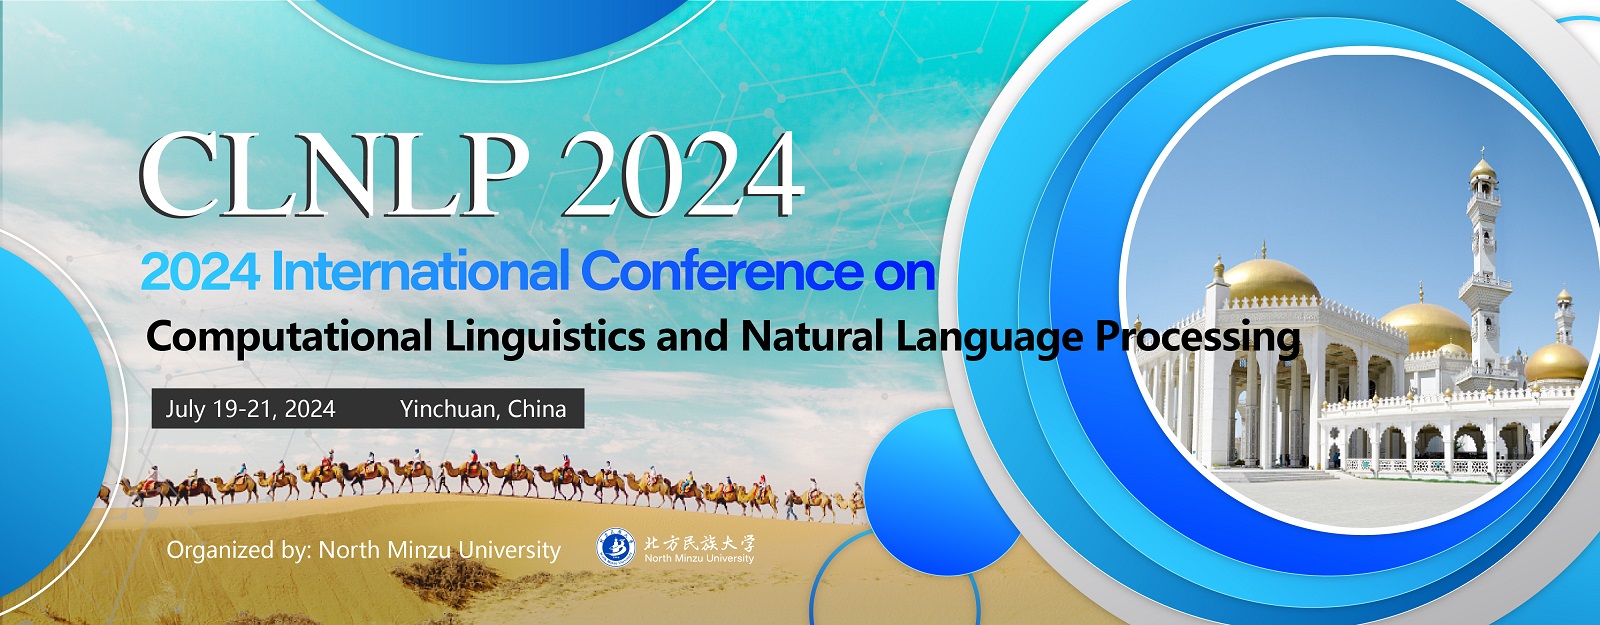 2024 International Conference on Computational Linguistics and Natural Language Processing (CLNLP 2024), Yinchuan, Ningxia, China